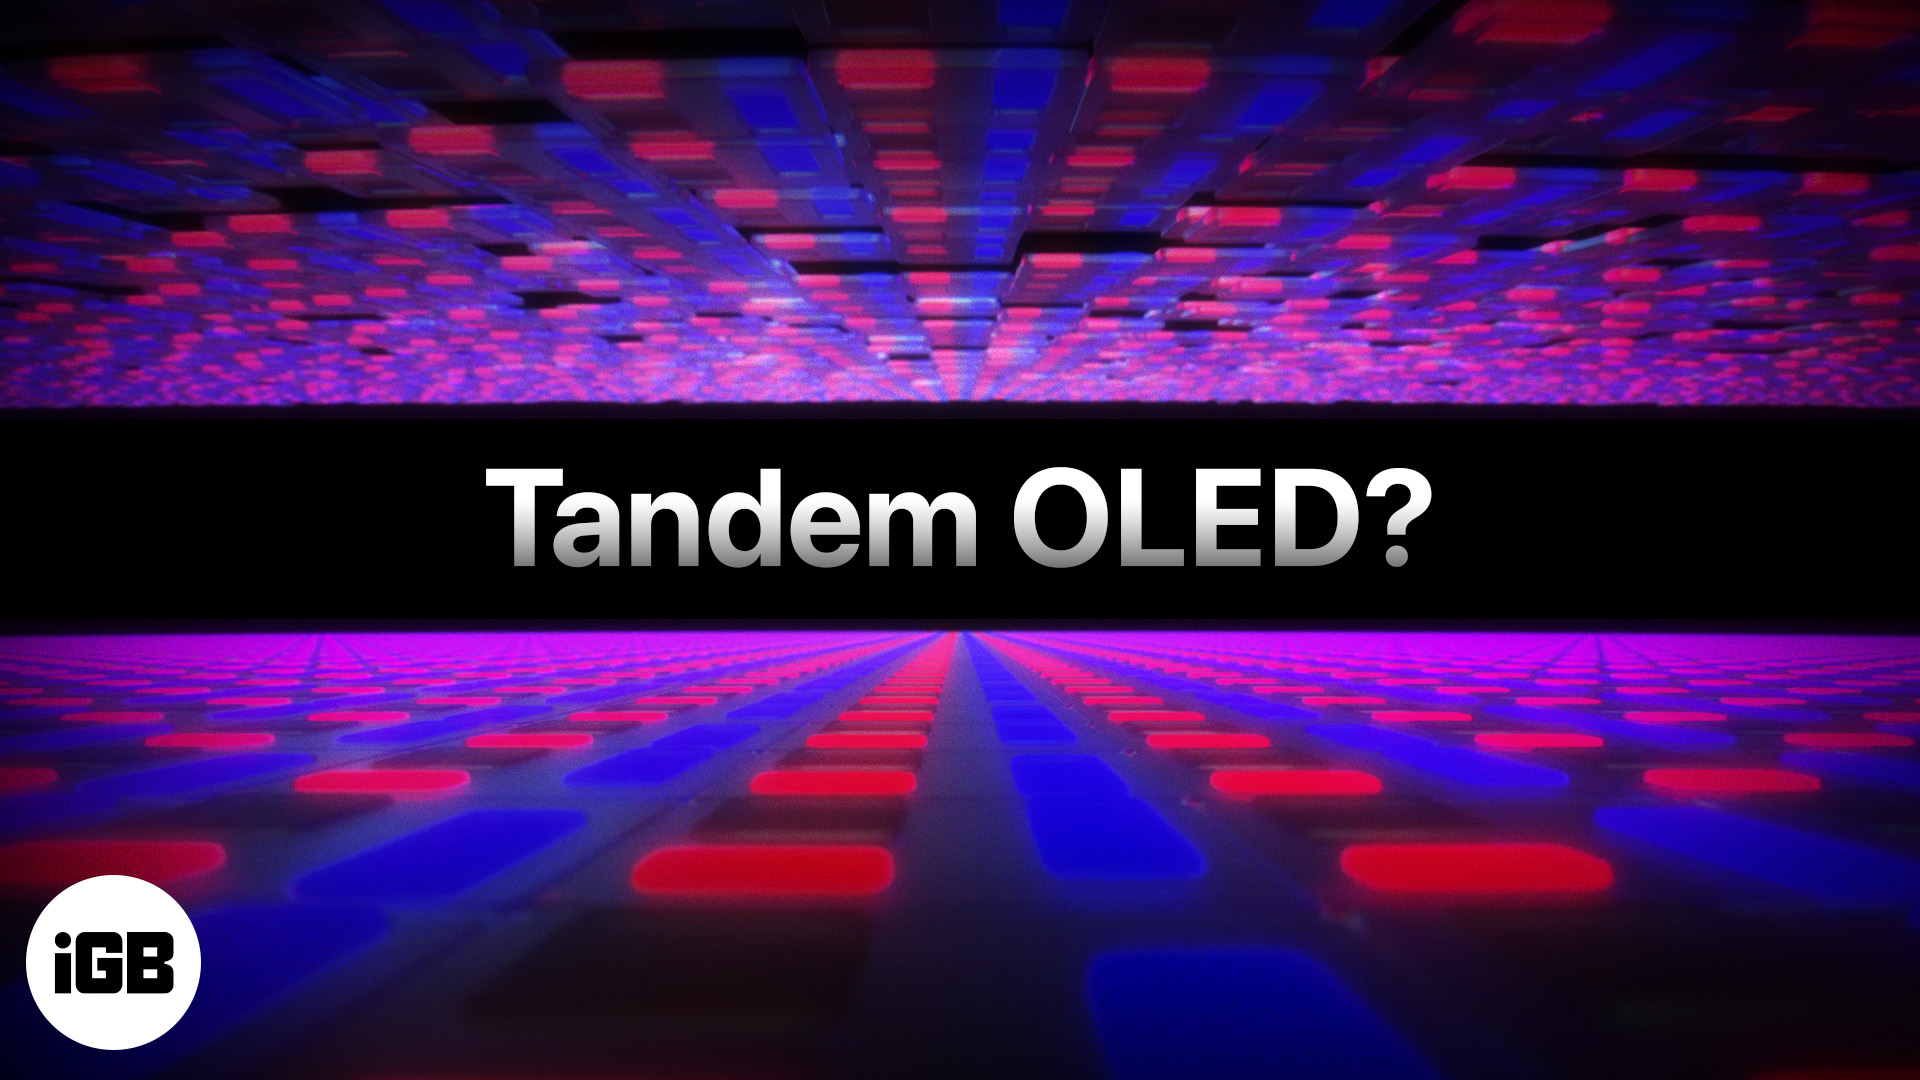 What is Tandem OLED on iPad Pro